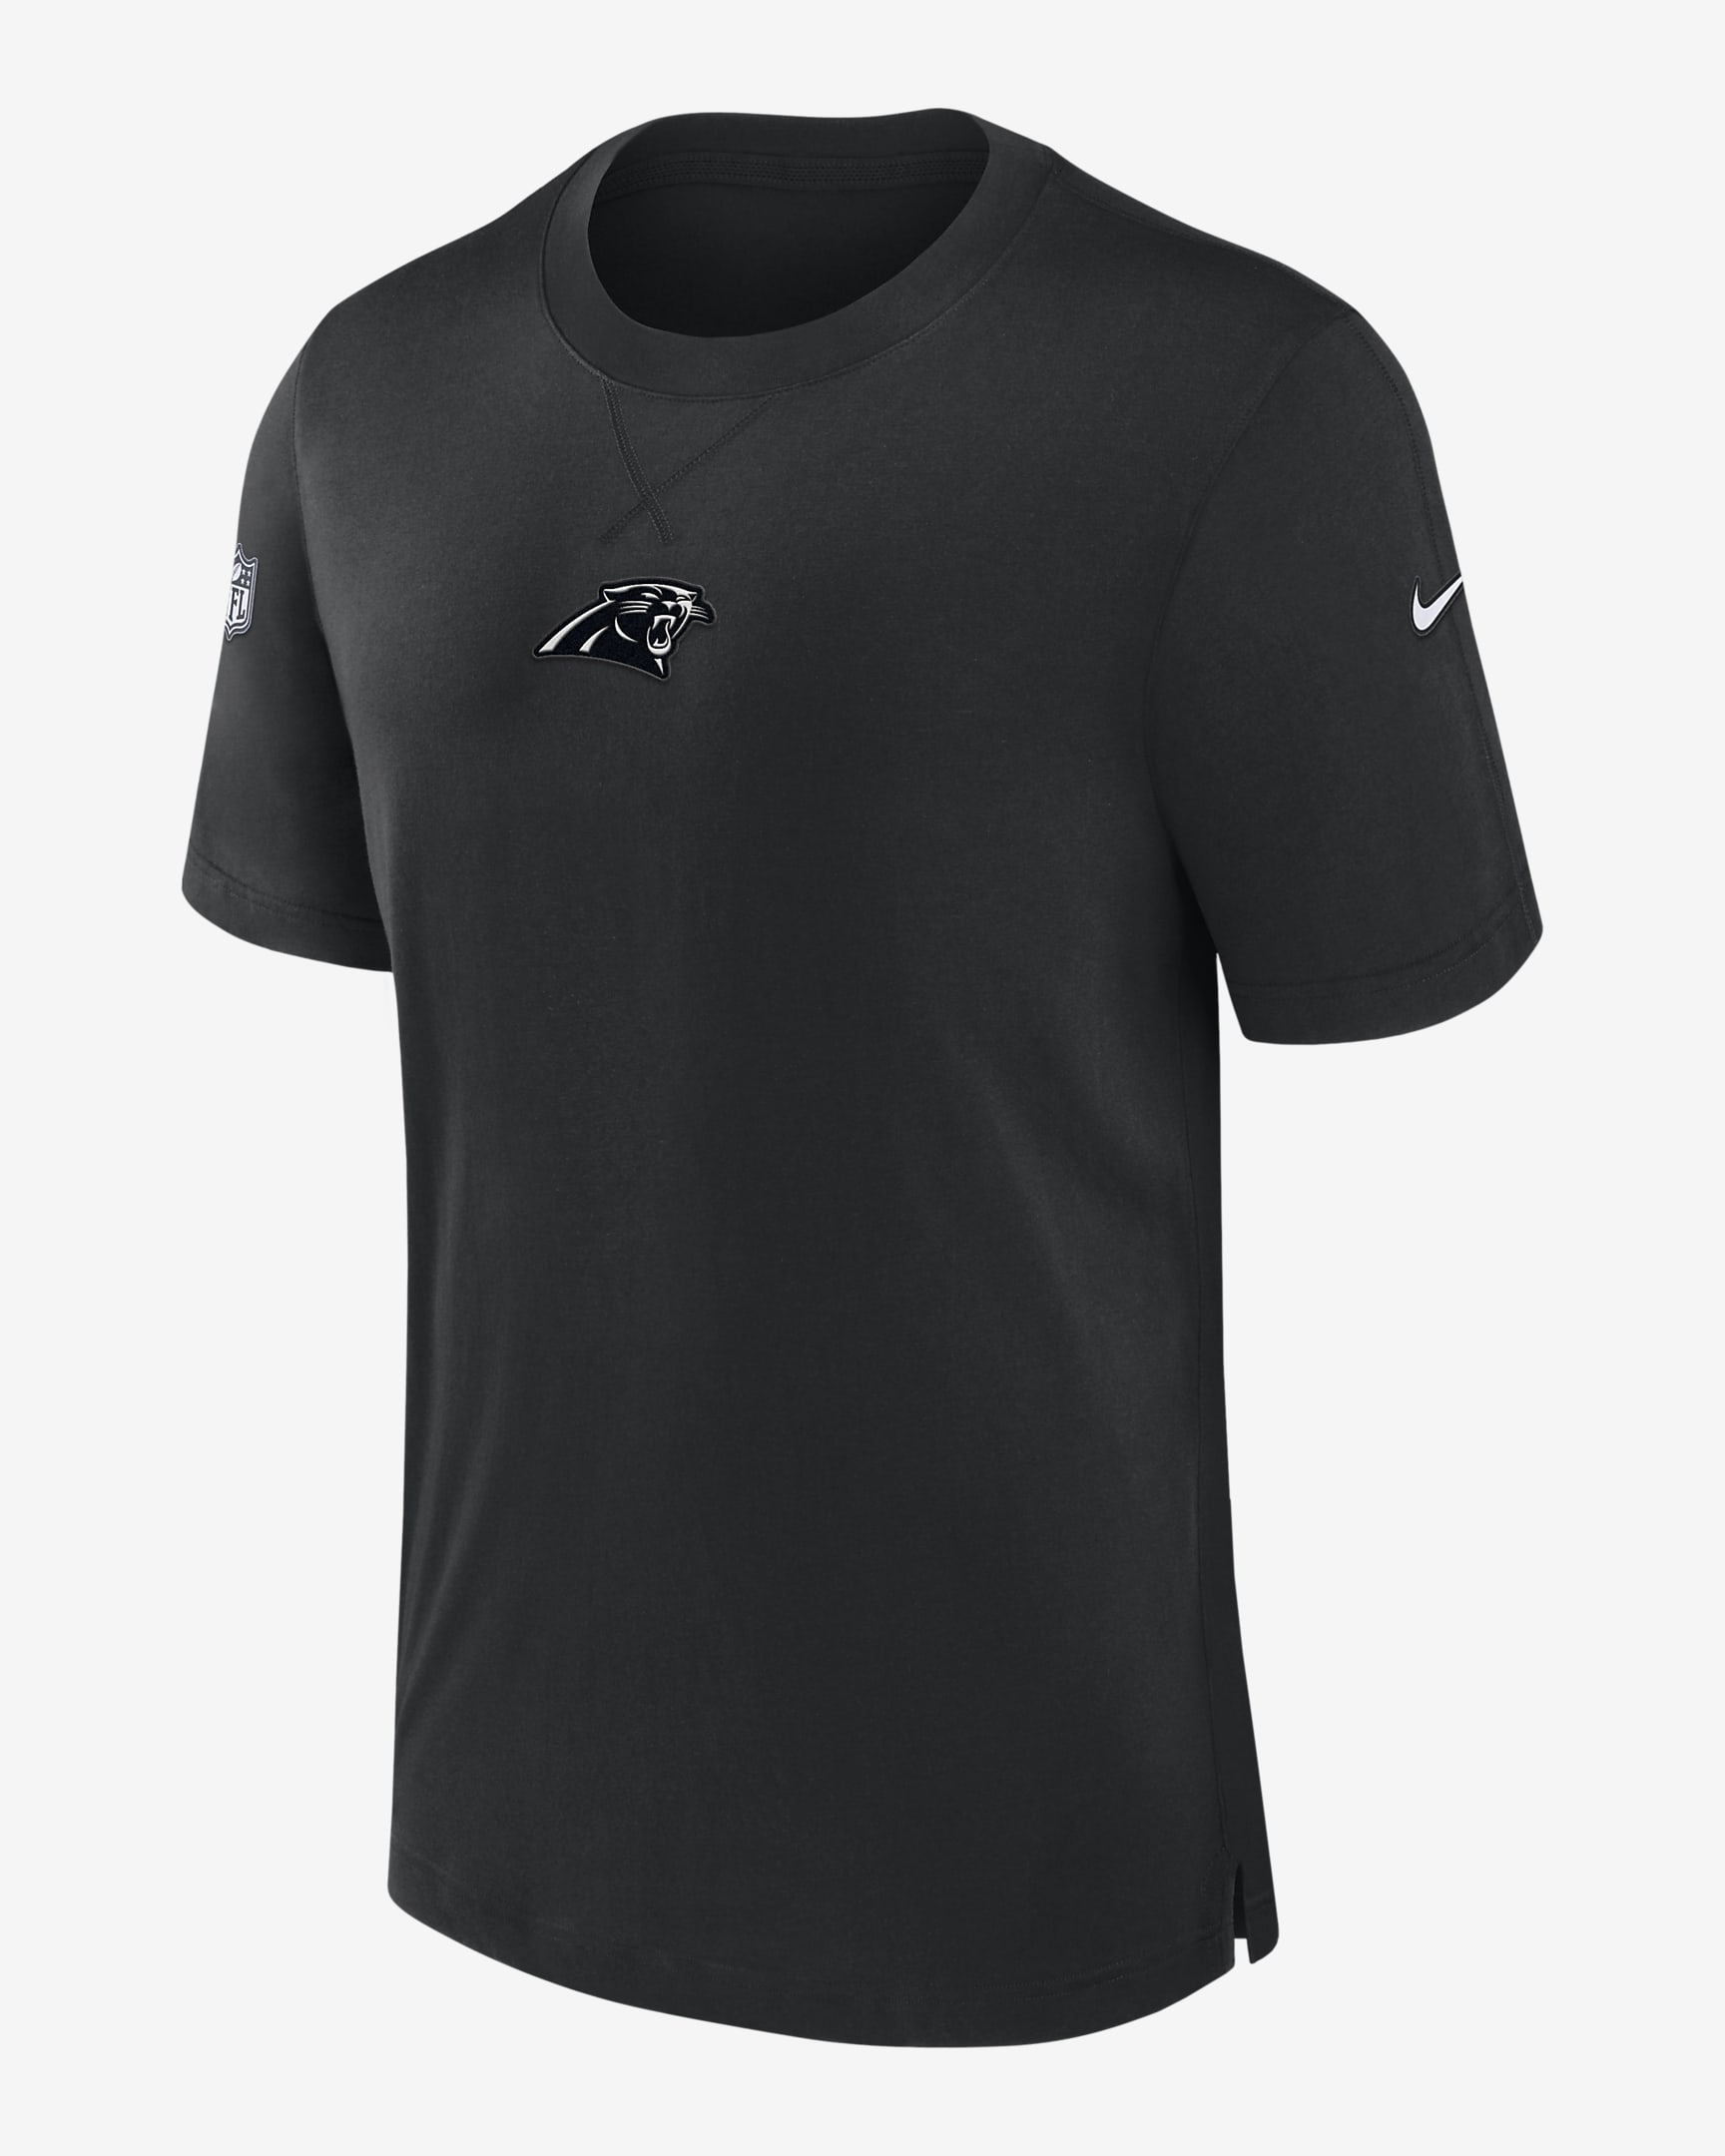 Playera Nike Dri-FIT de la NFL para hombre Carolina Panthers Sideline ...